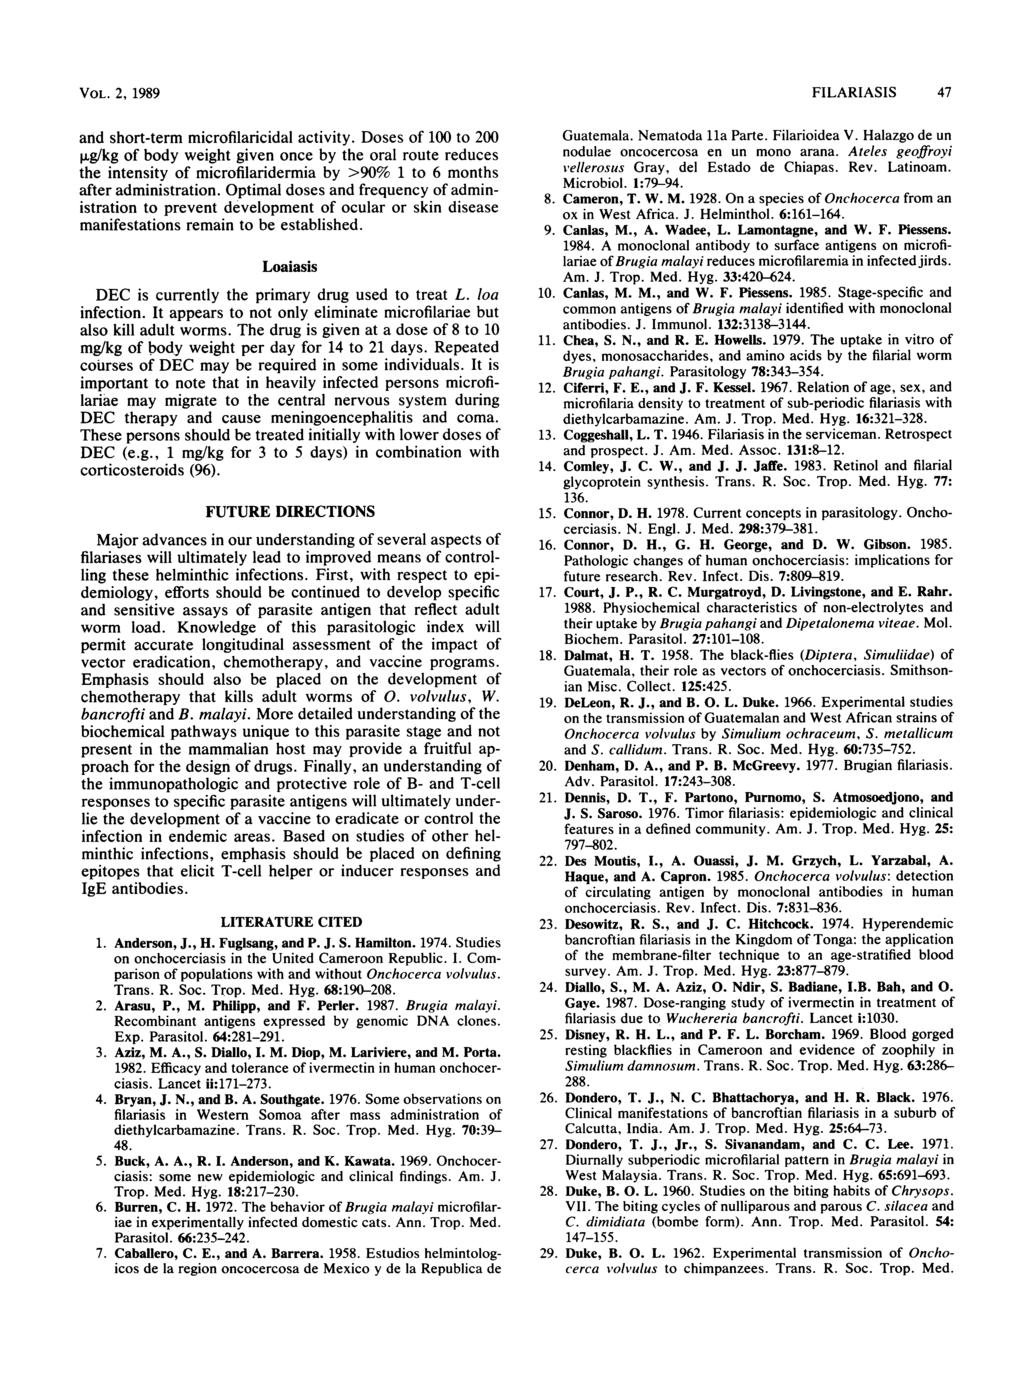 VOL. 2, 1989 and short-term microfilaricidal activity.